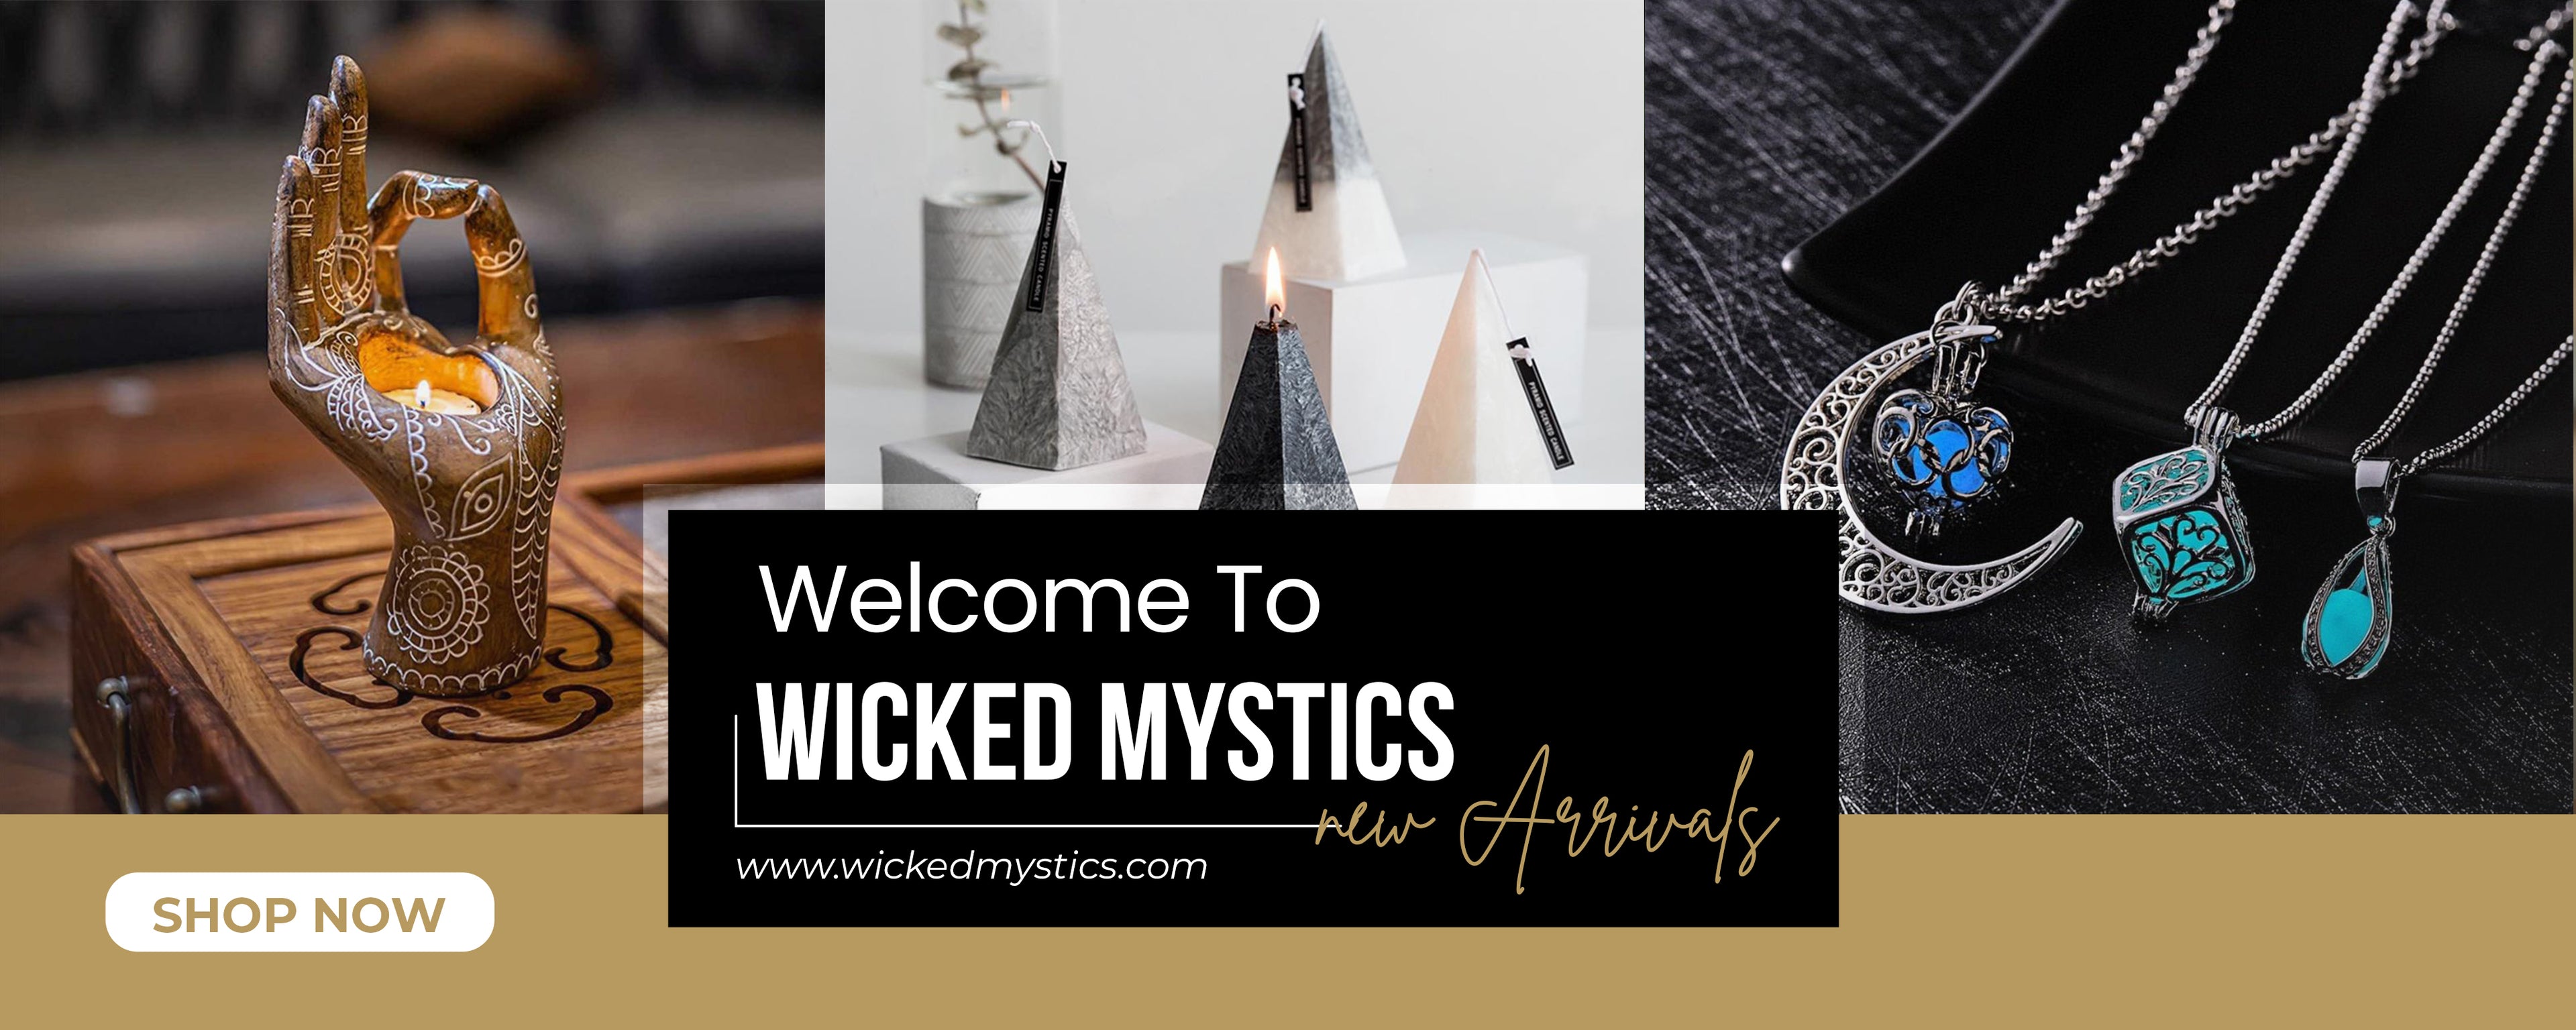 wicked mystics banner 1